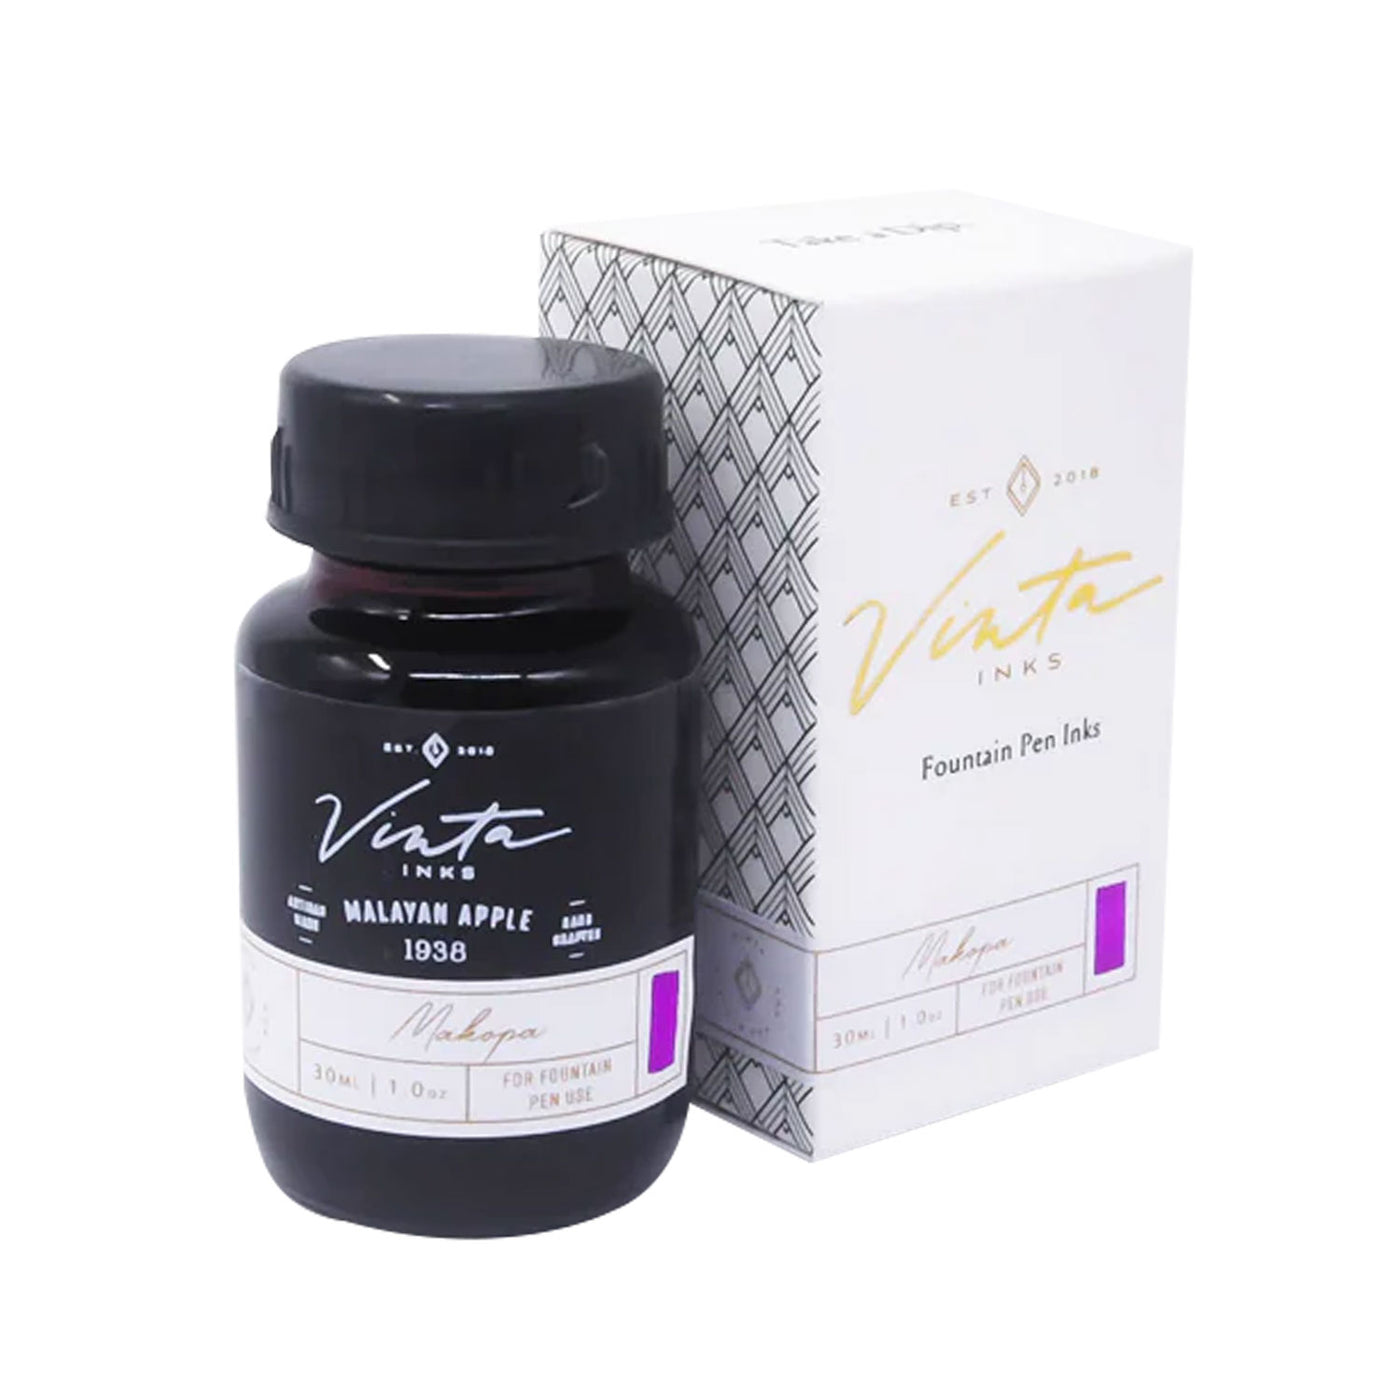 Vinta Heritage Collection Malayan Apple Ink Bottle Purple - 30ml 2